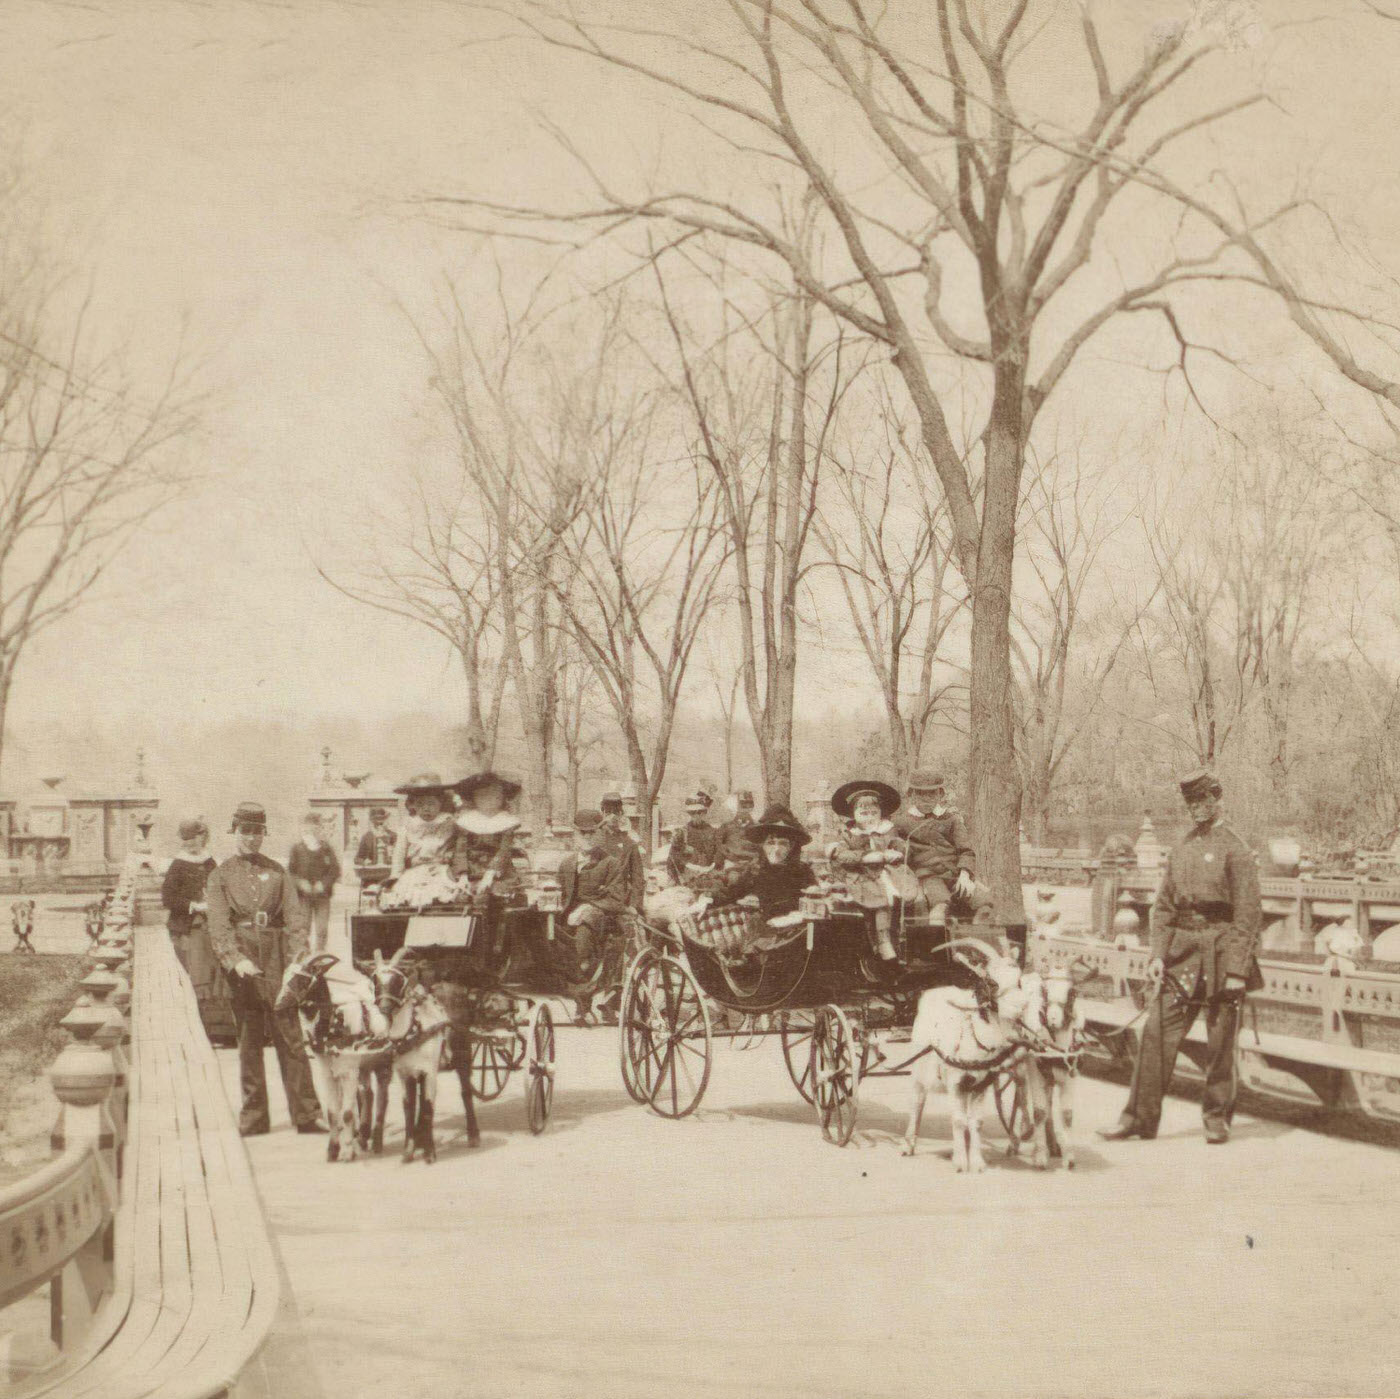 Goat Team, Central Park, Manhattan, 1870